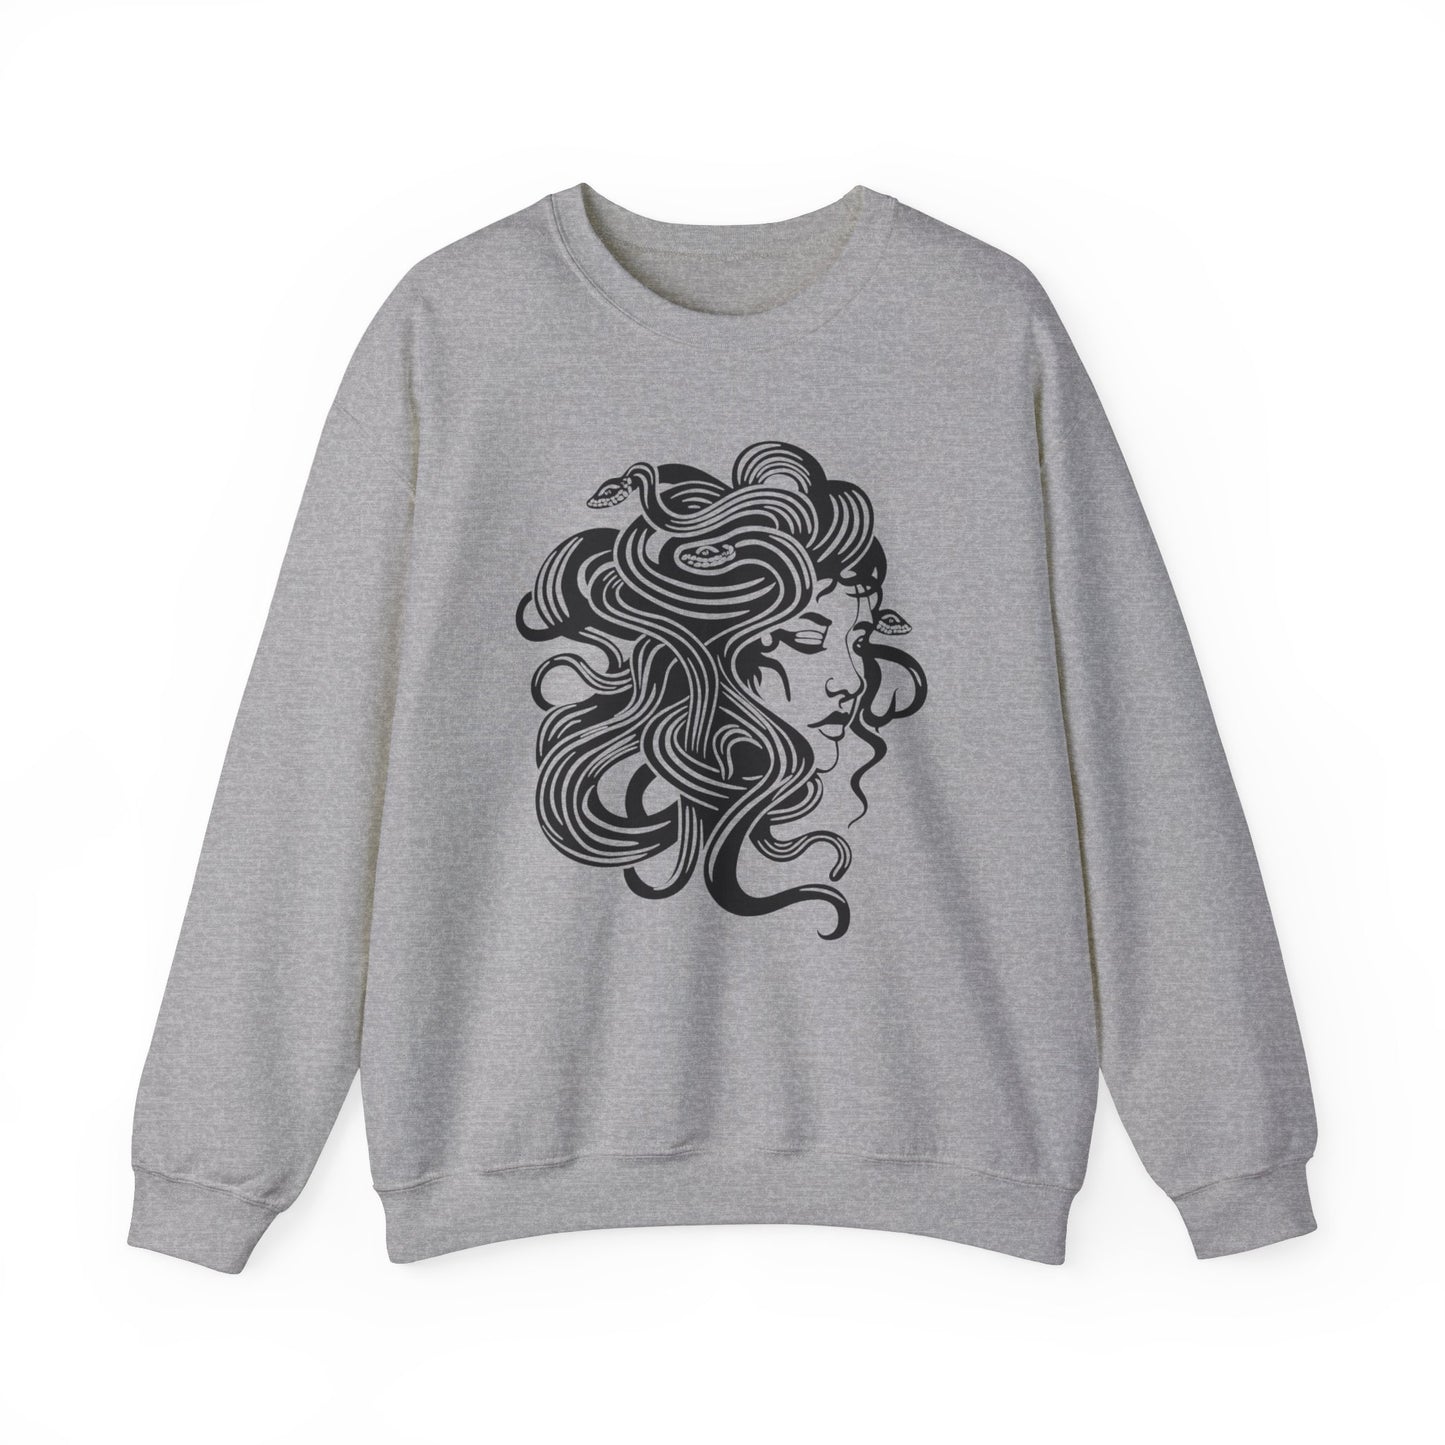 Medusa Women's Crewneck Sweatshirt - Minimalistic Print, AI Made Cool Artsy Design, Dark Style Edgy, Long Sleeve Medusa Snake Design